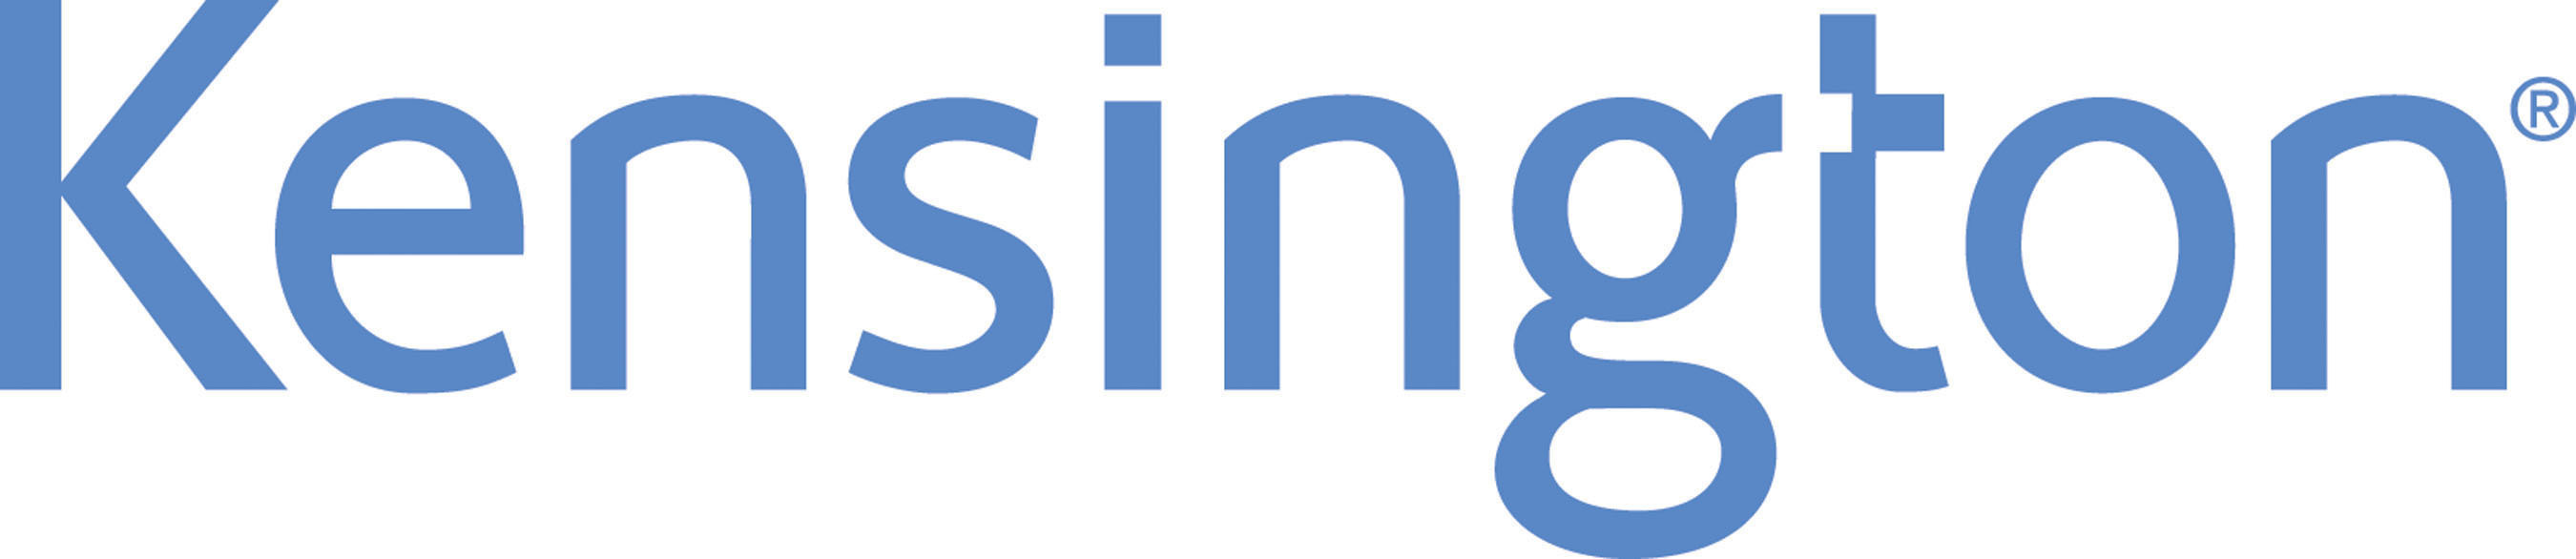 Kensington Logo. (PRNewsFoto/Kensington Computer Products Group)